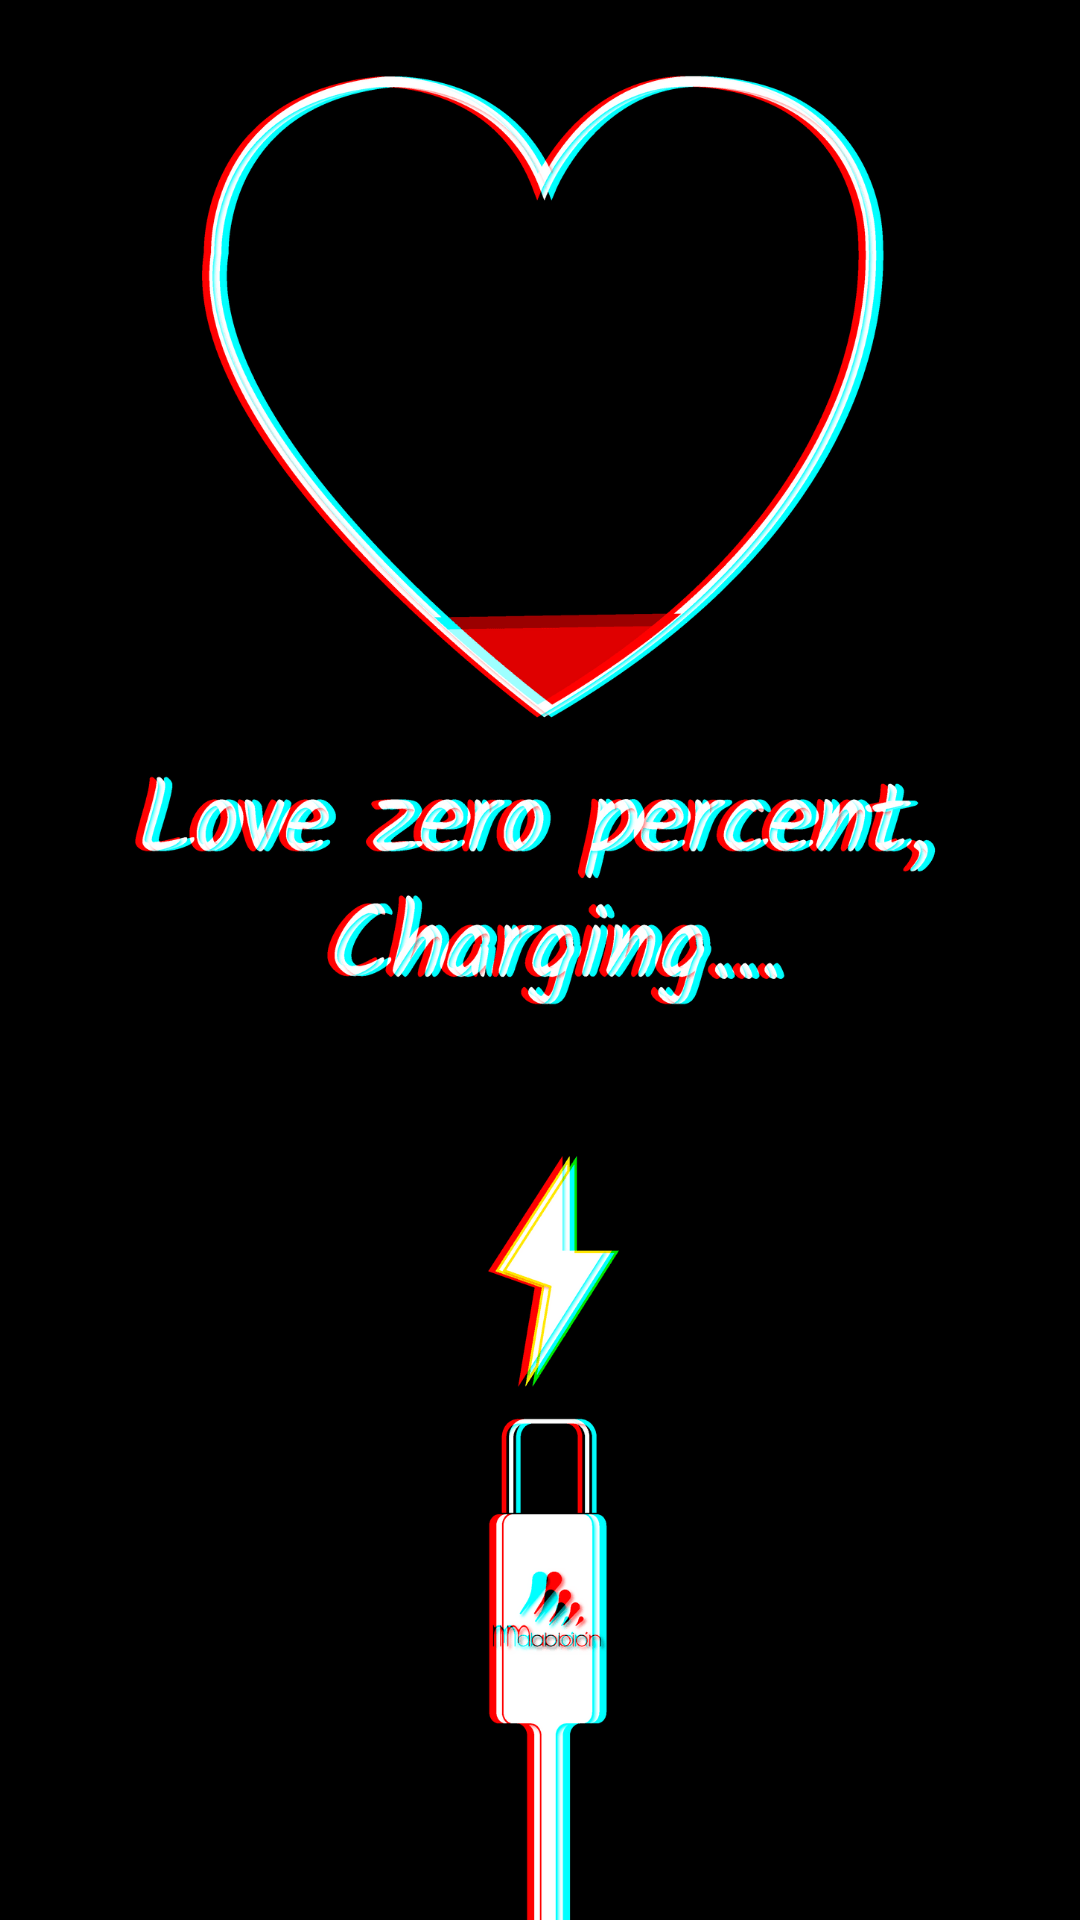 Heart symbol charging